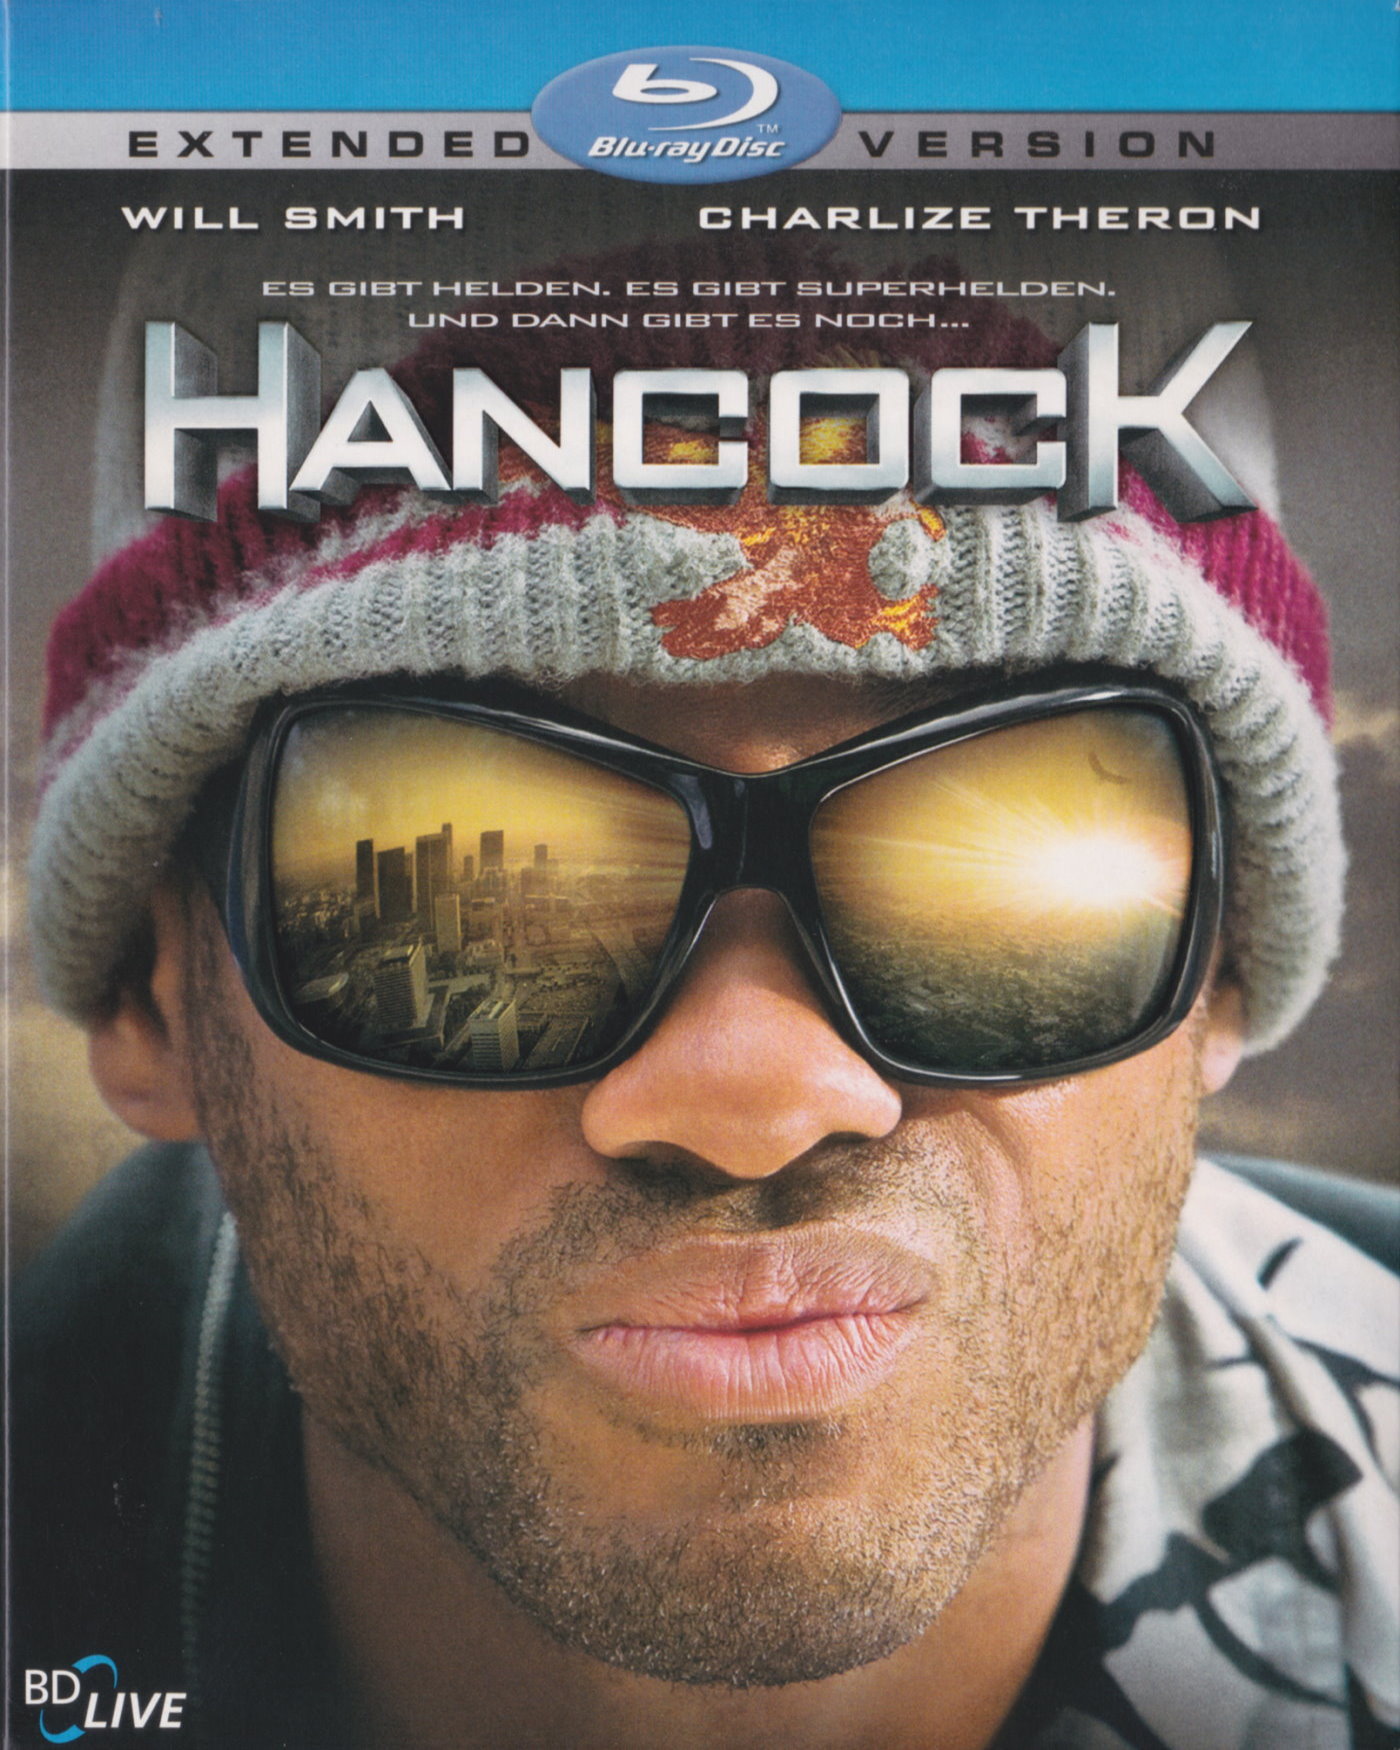 Cover - Hancock.jpg